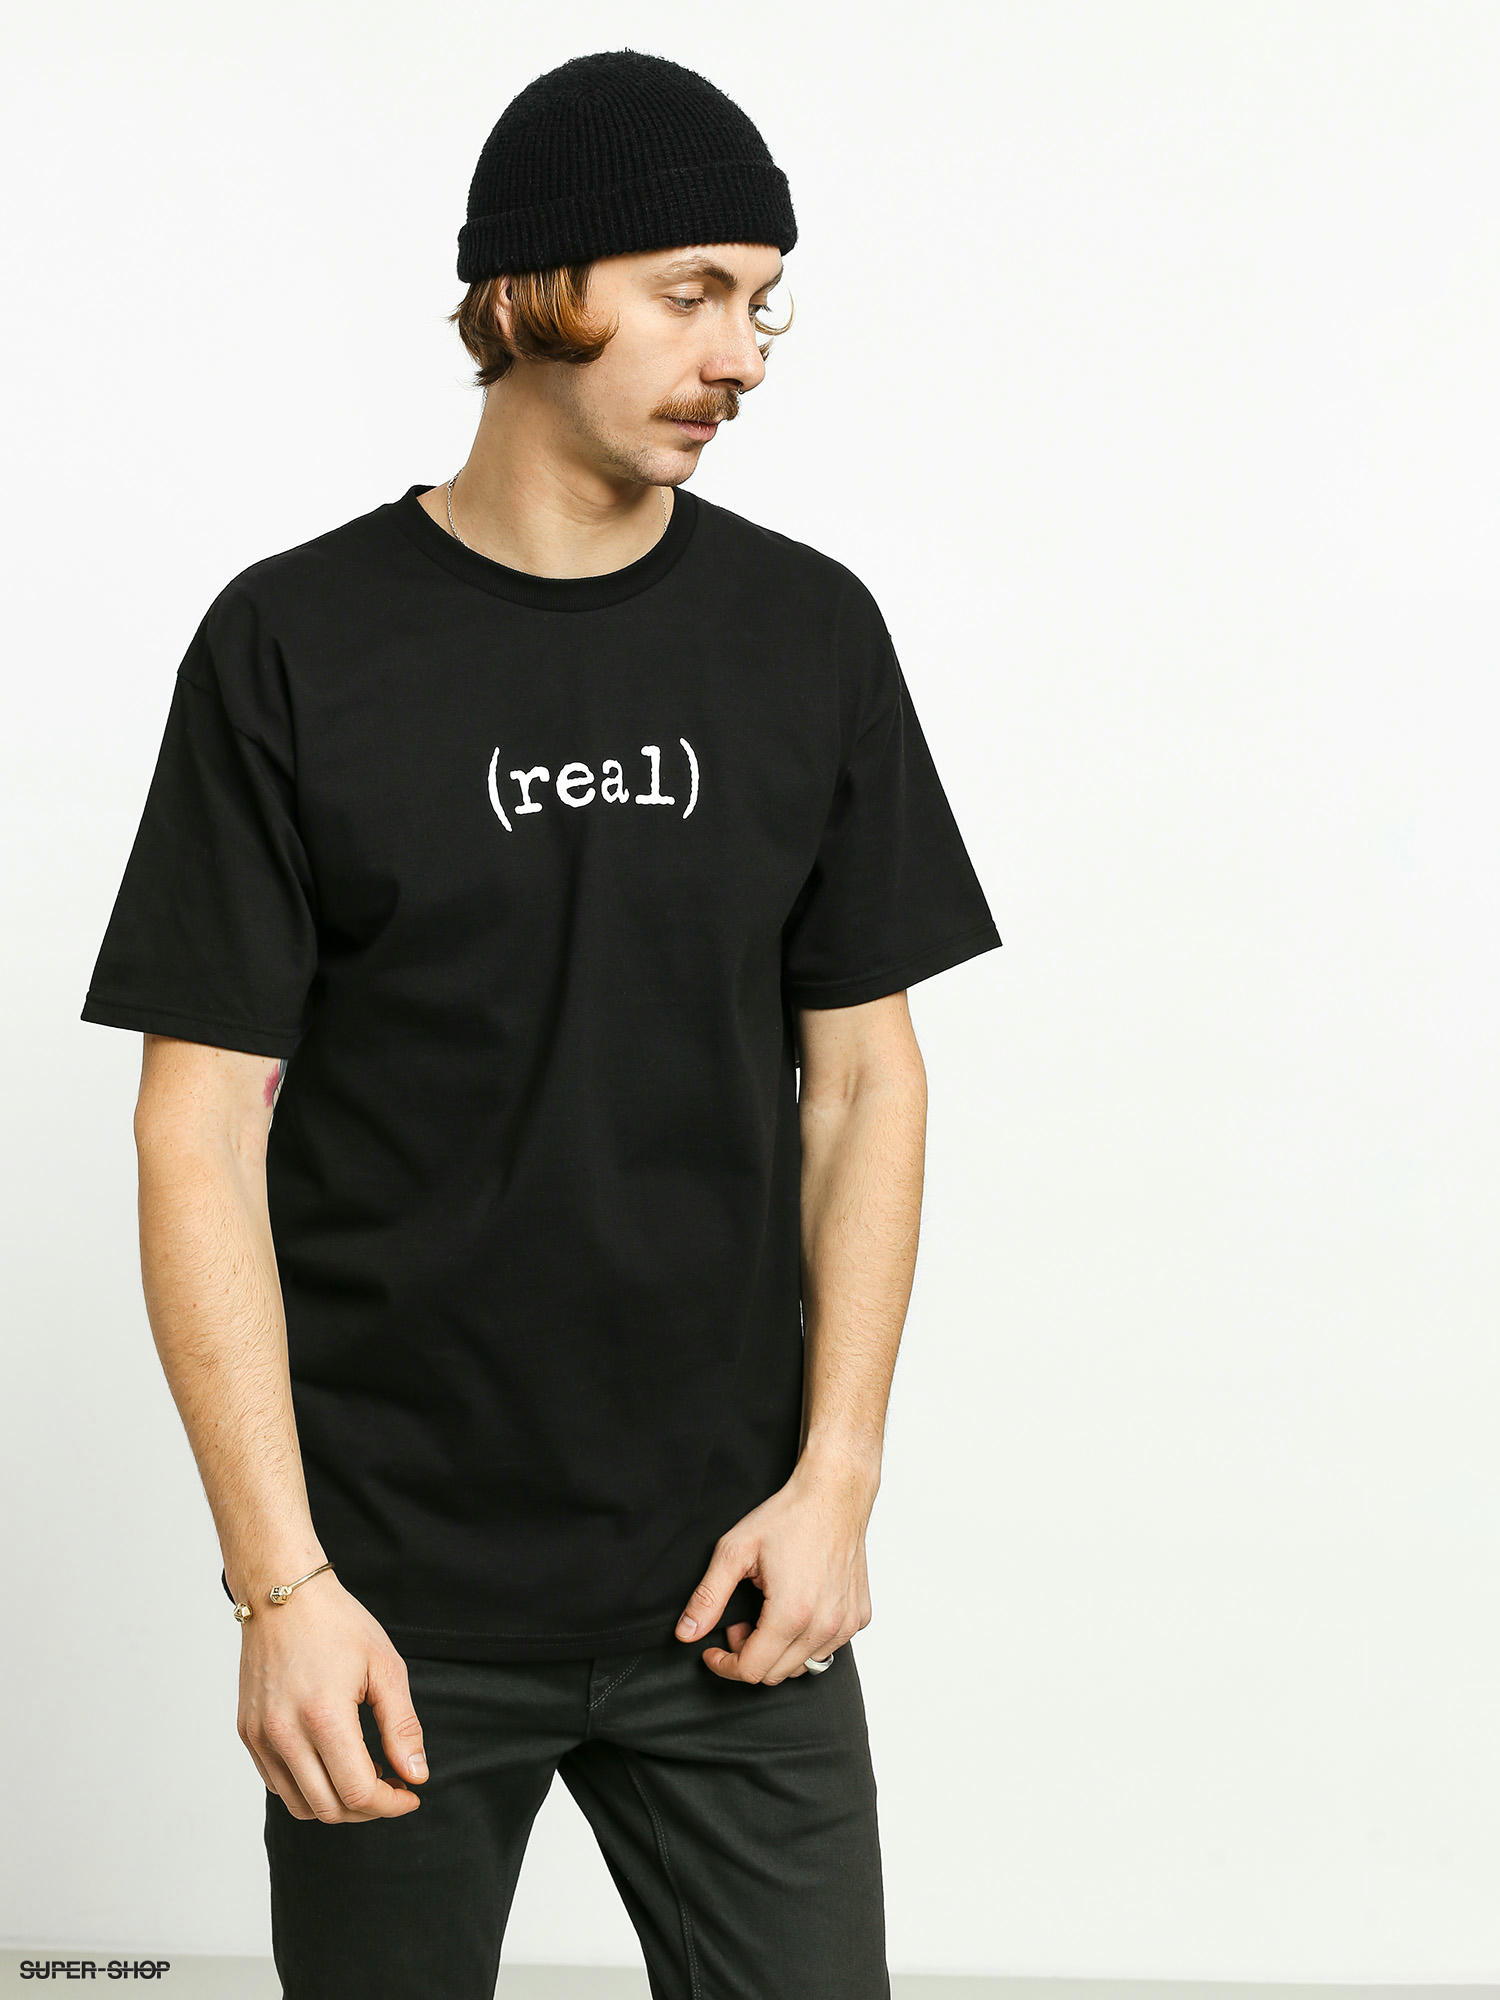 Real Lower T-shirt (black/white)